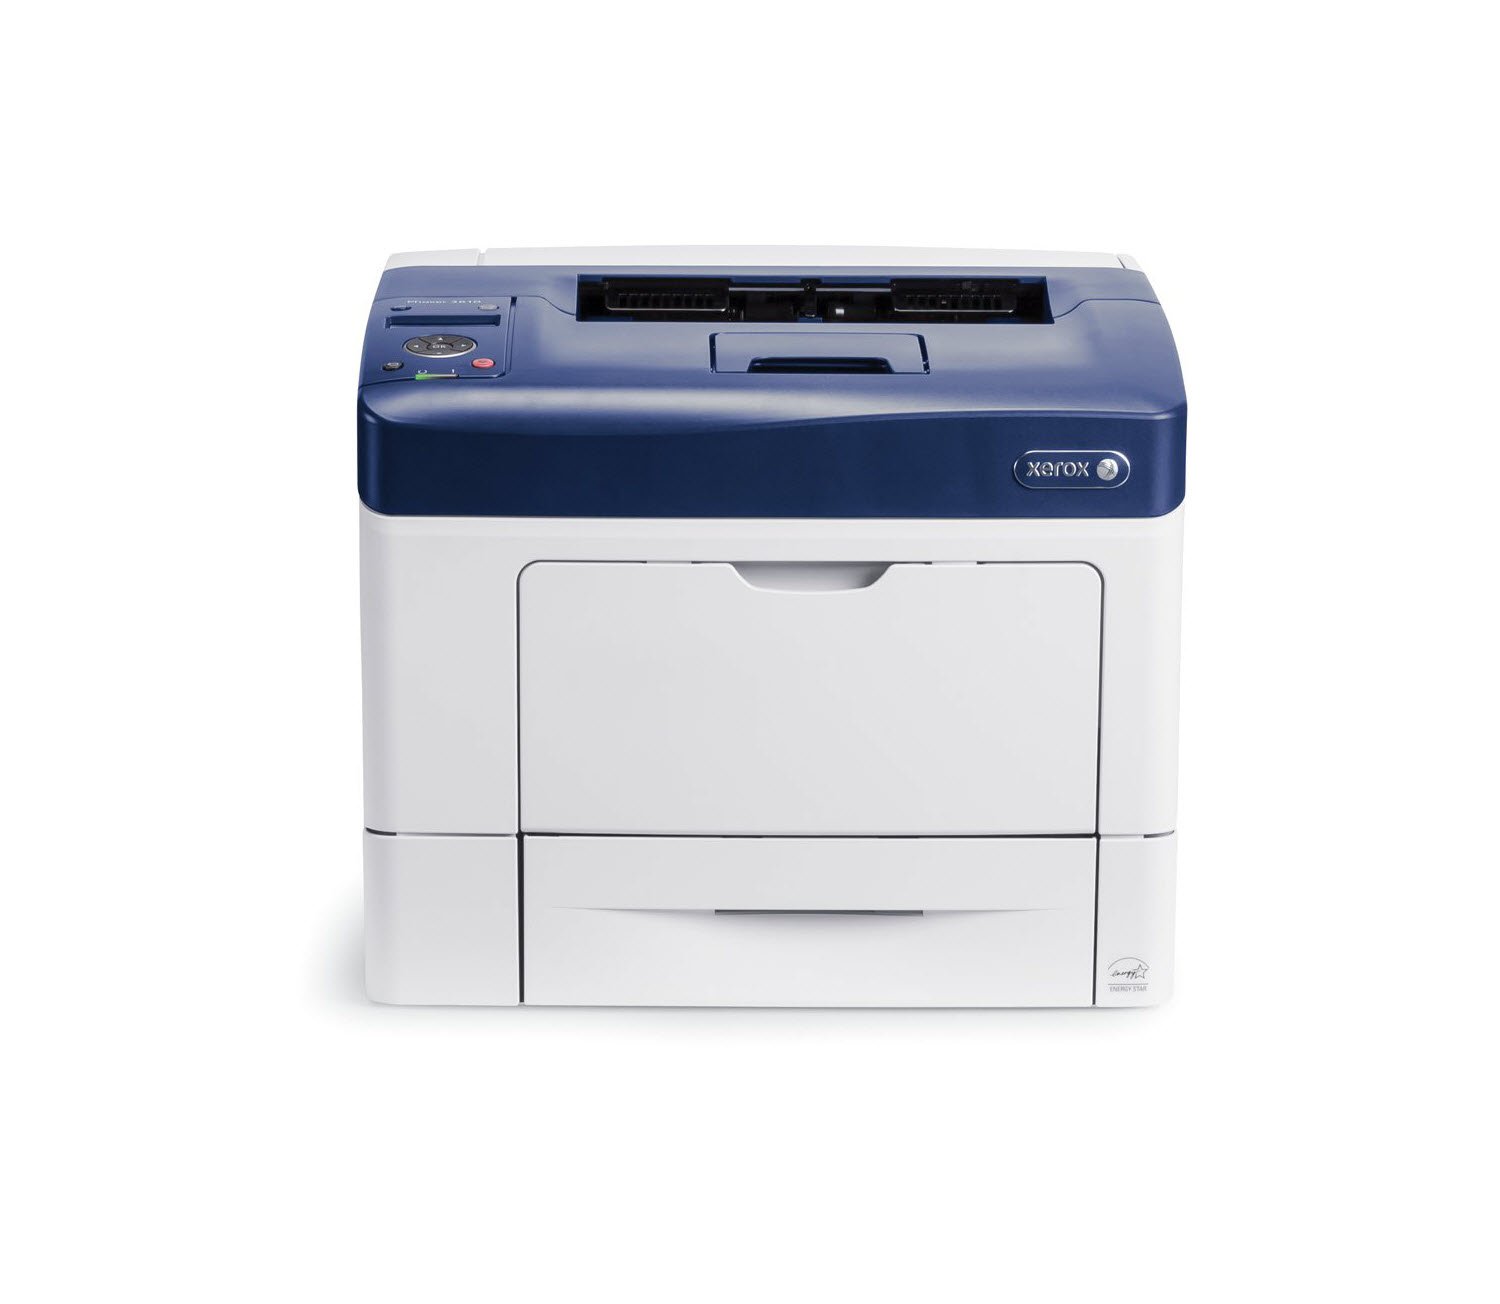 Xerox Phaser 3610/N Monochrome Laser Printer